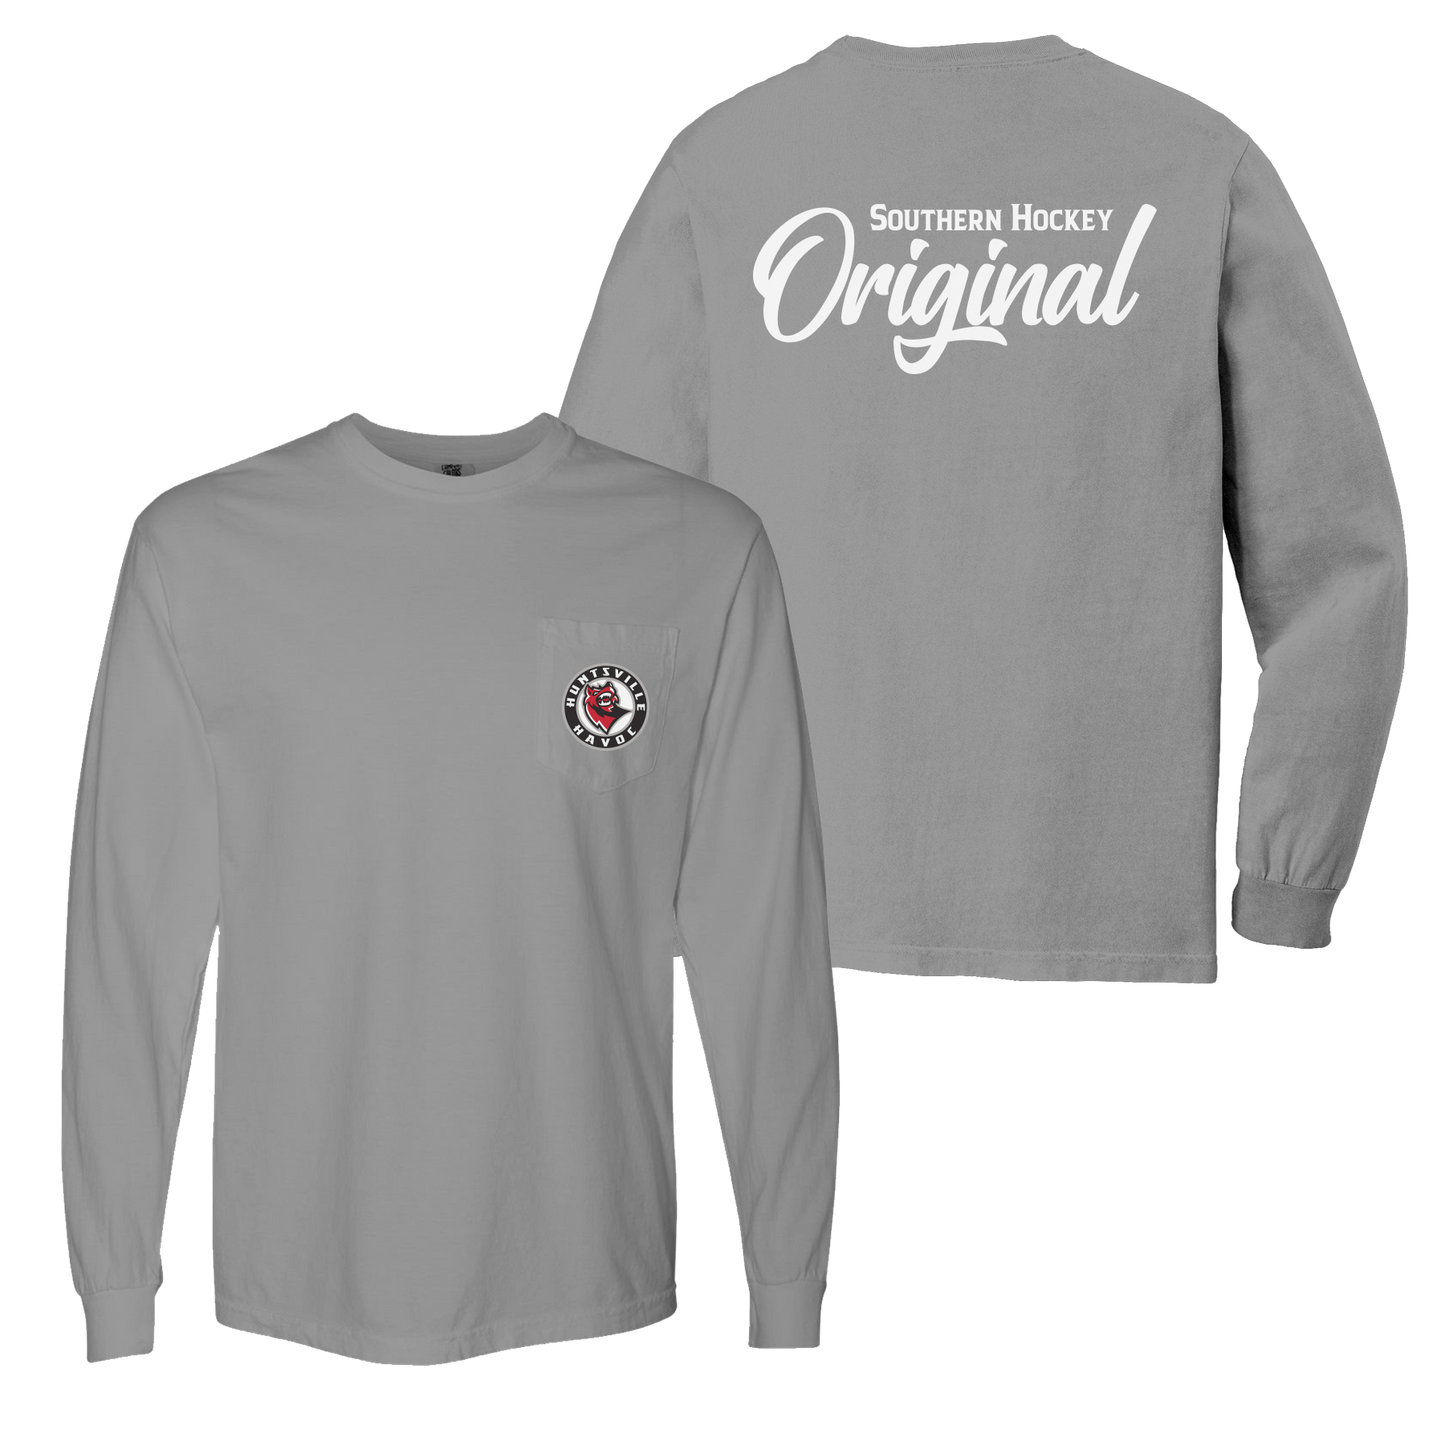 Southern Hockey Original Comfort Colors Pocket Long Sleeve T-Shirt